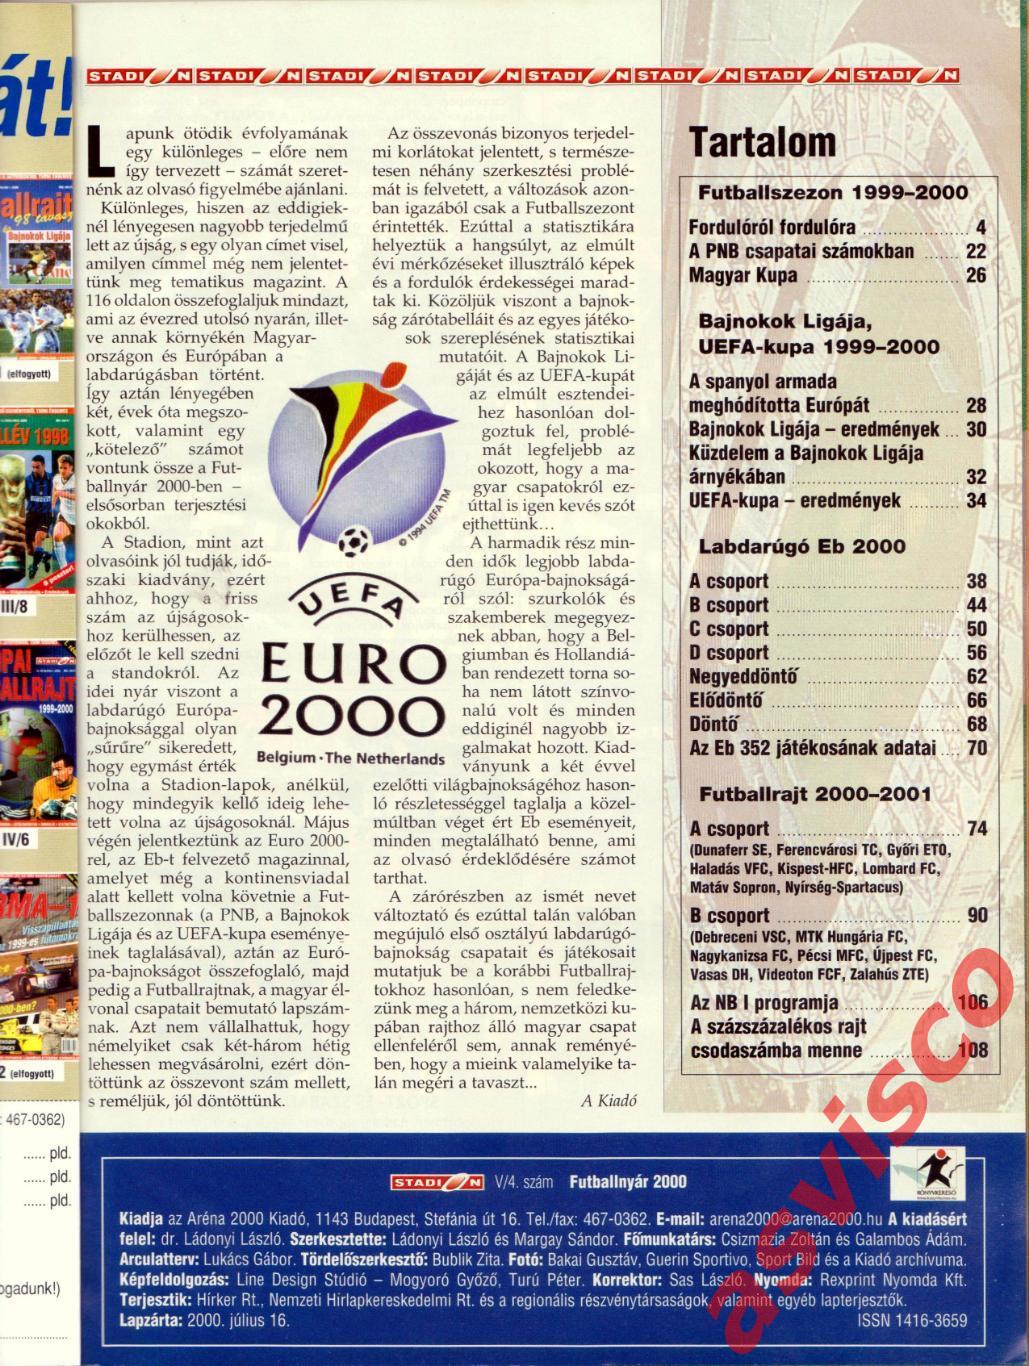 Чемпионат Венгрии по футболу. Сезон 2000-2001 годов. Представление команд. 1